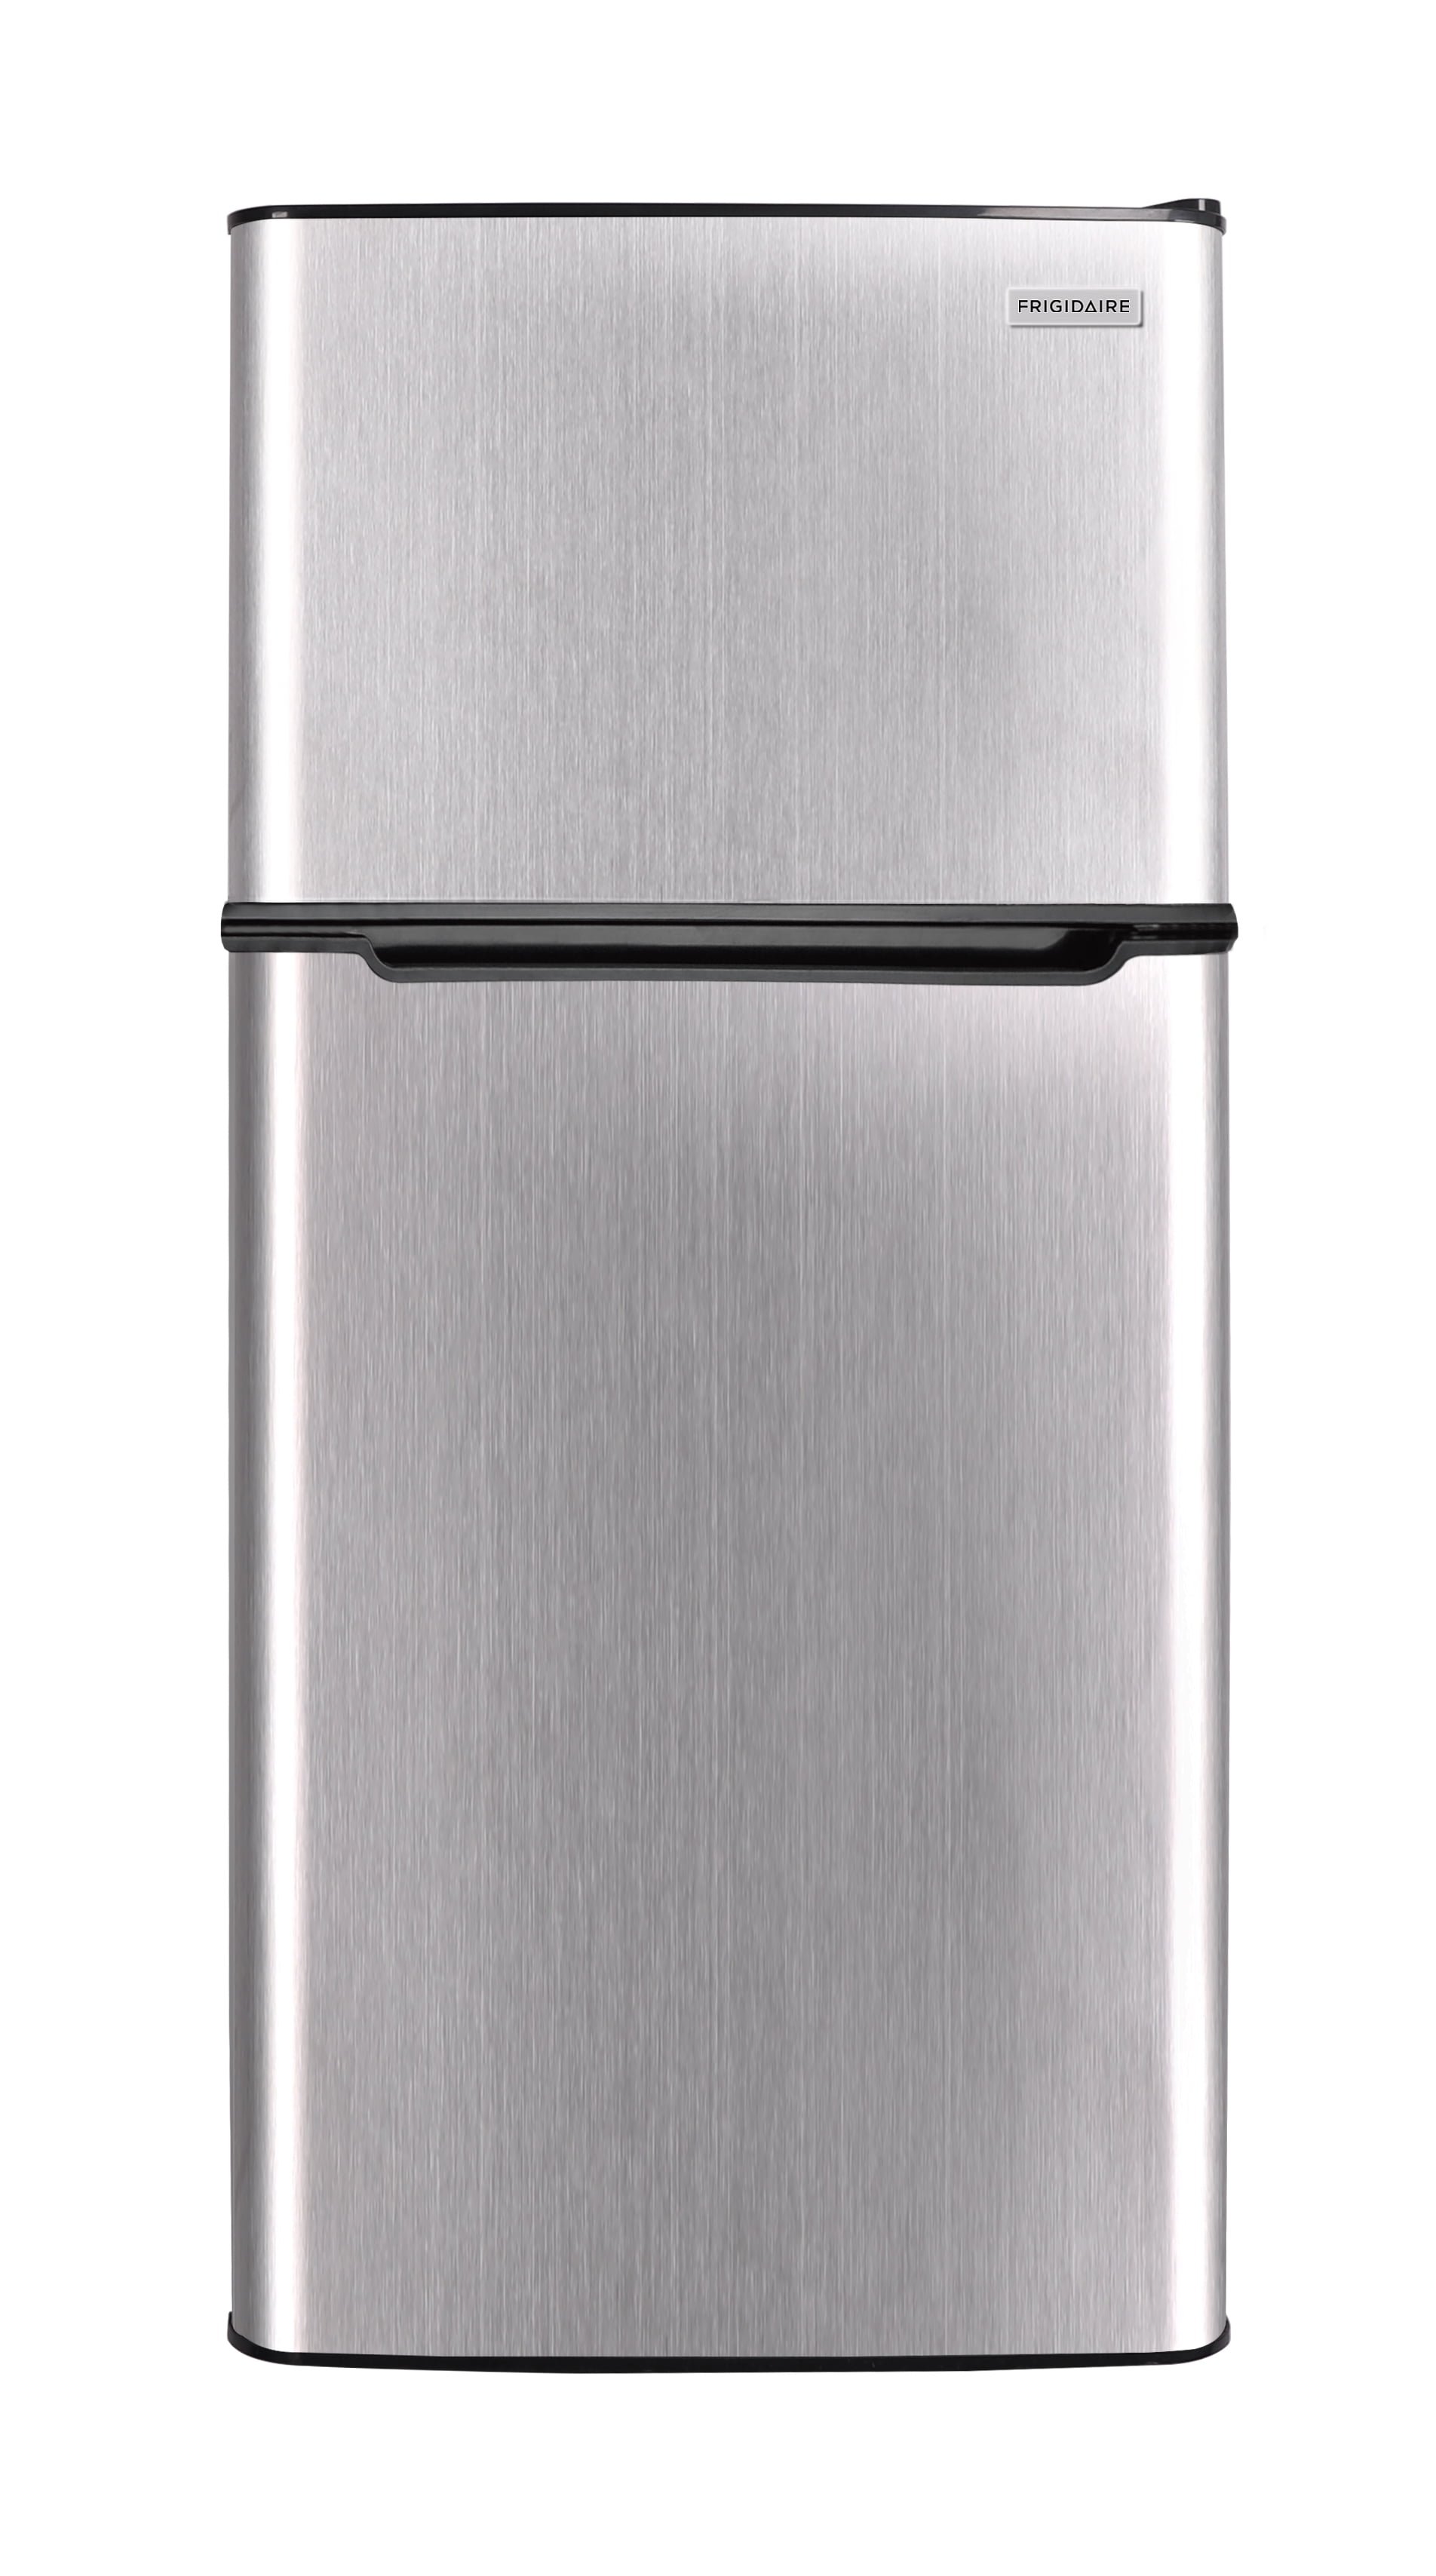 Arctic King 3.2 Cu ft. Two Door Compact Refrigerator with Freezer